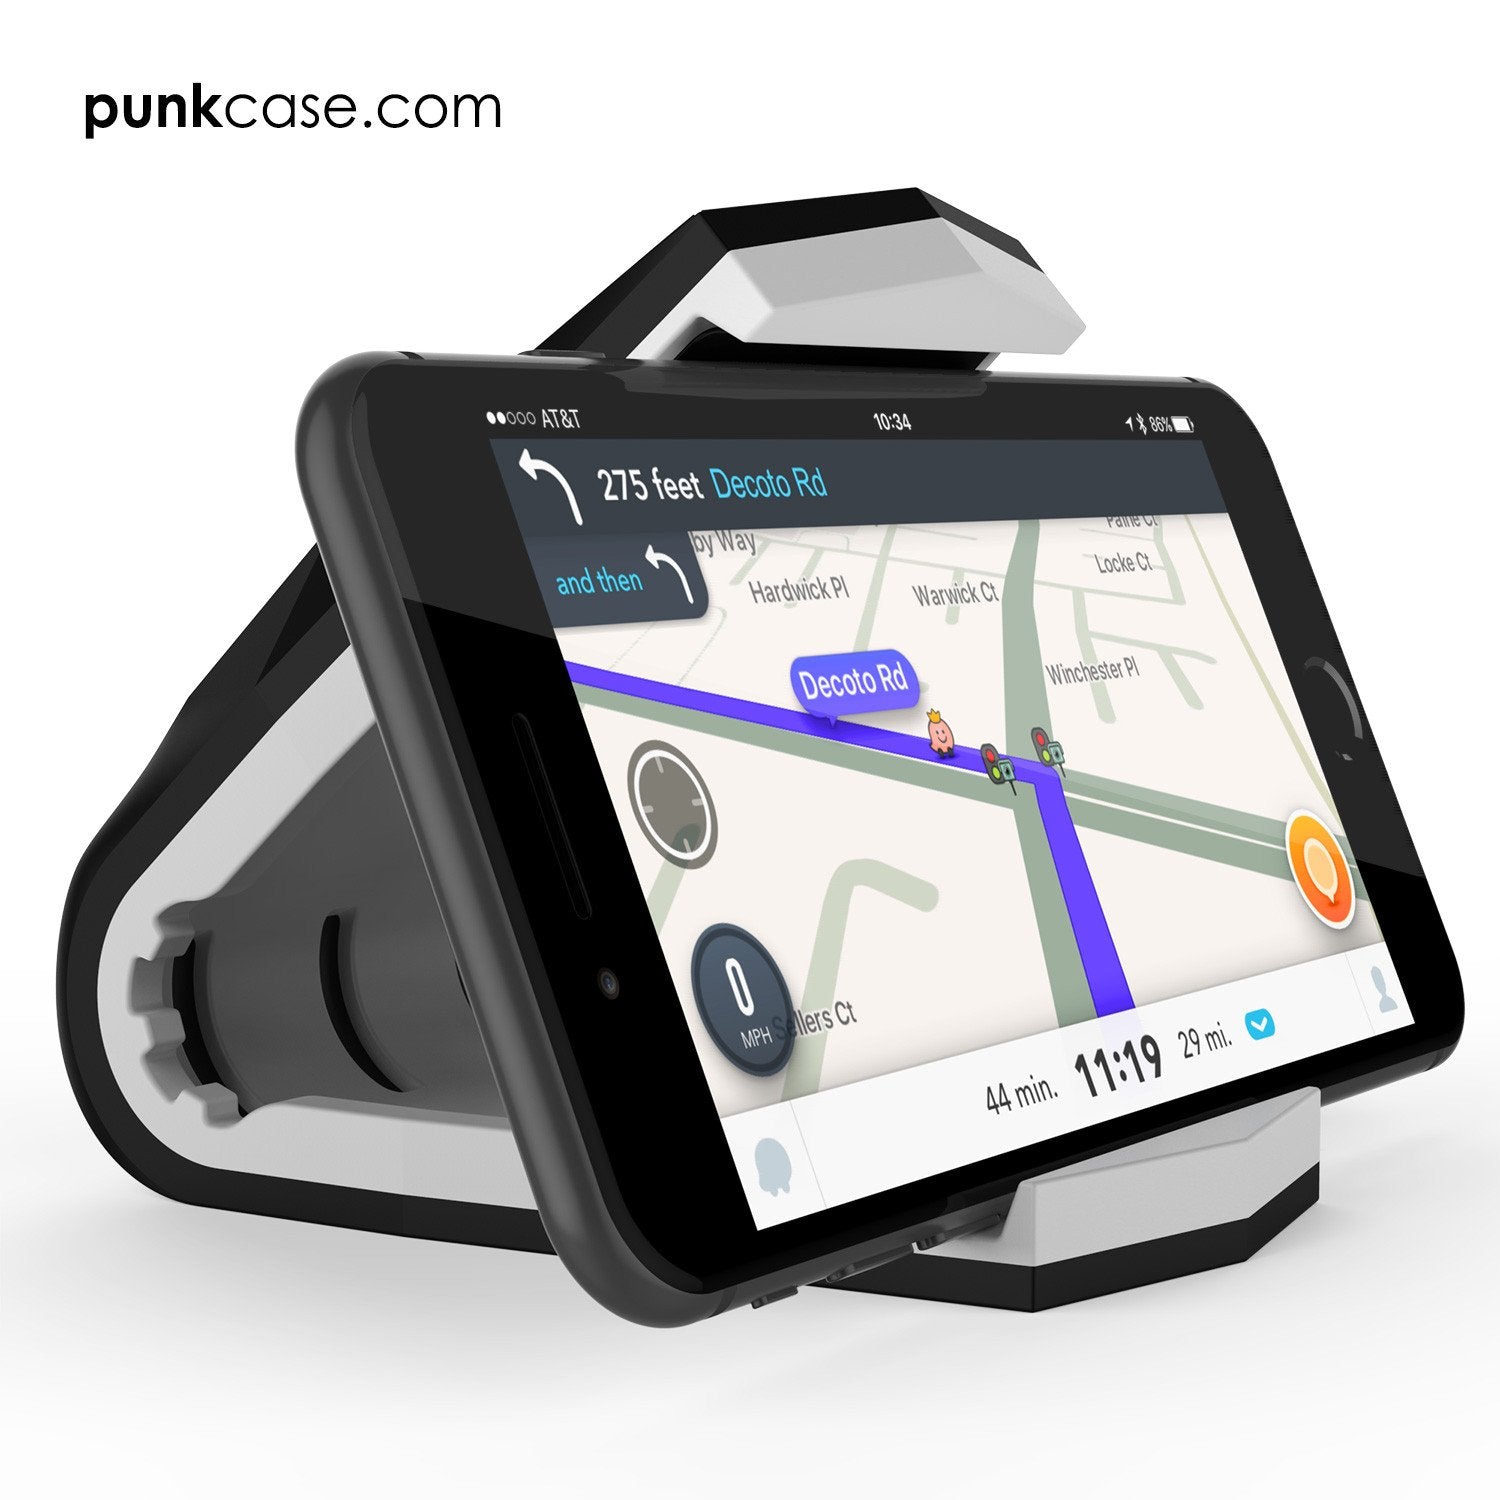 Viper Car Phone Holder White, Universal Dashboard Mount for all Smartphones